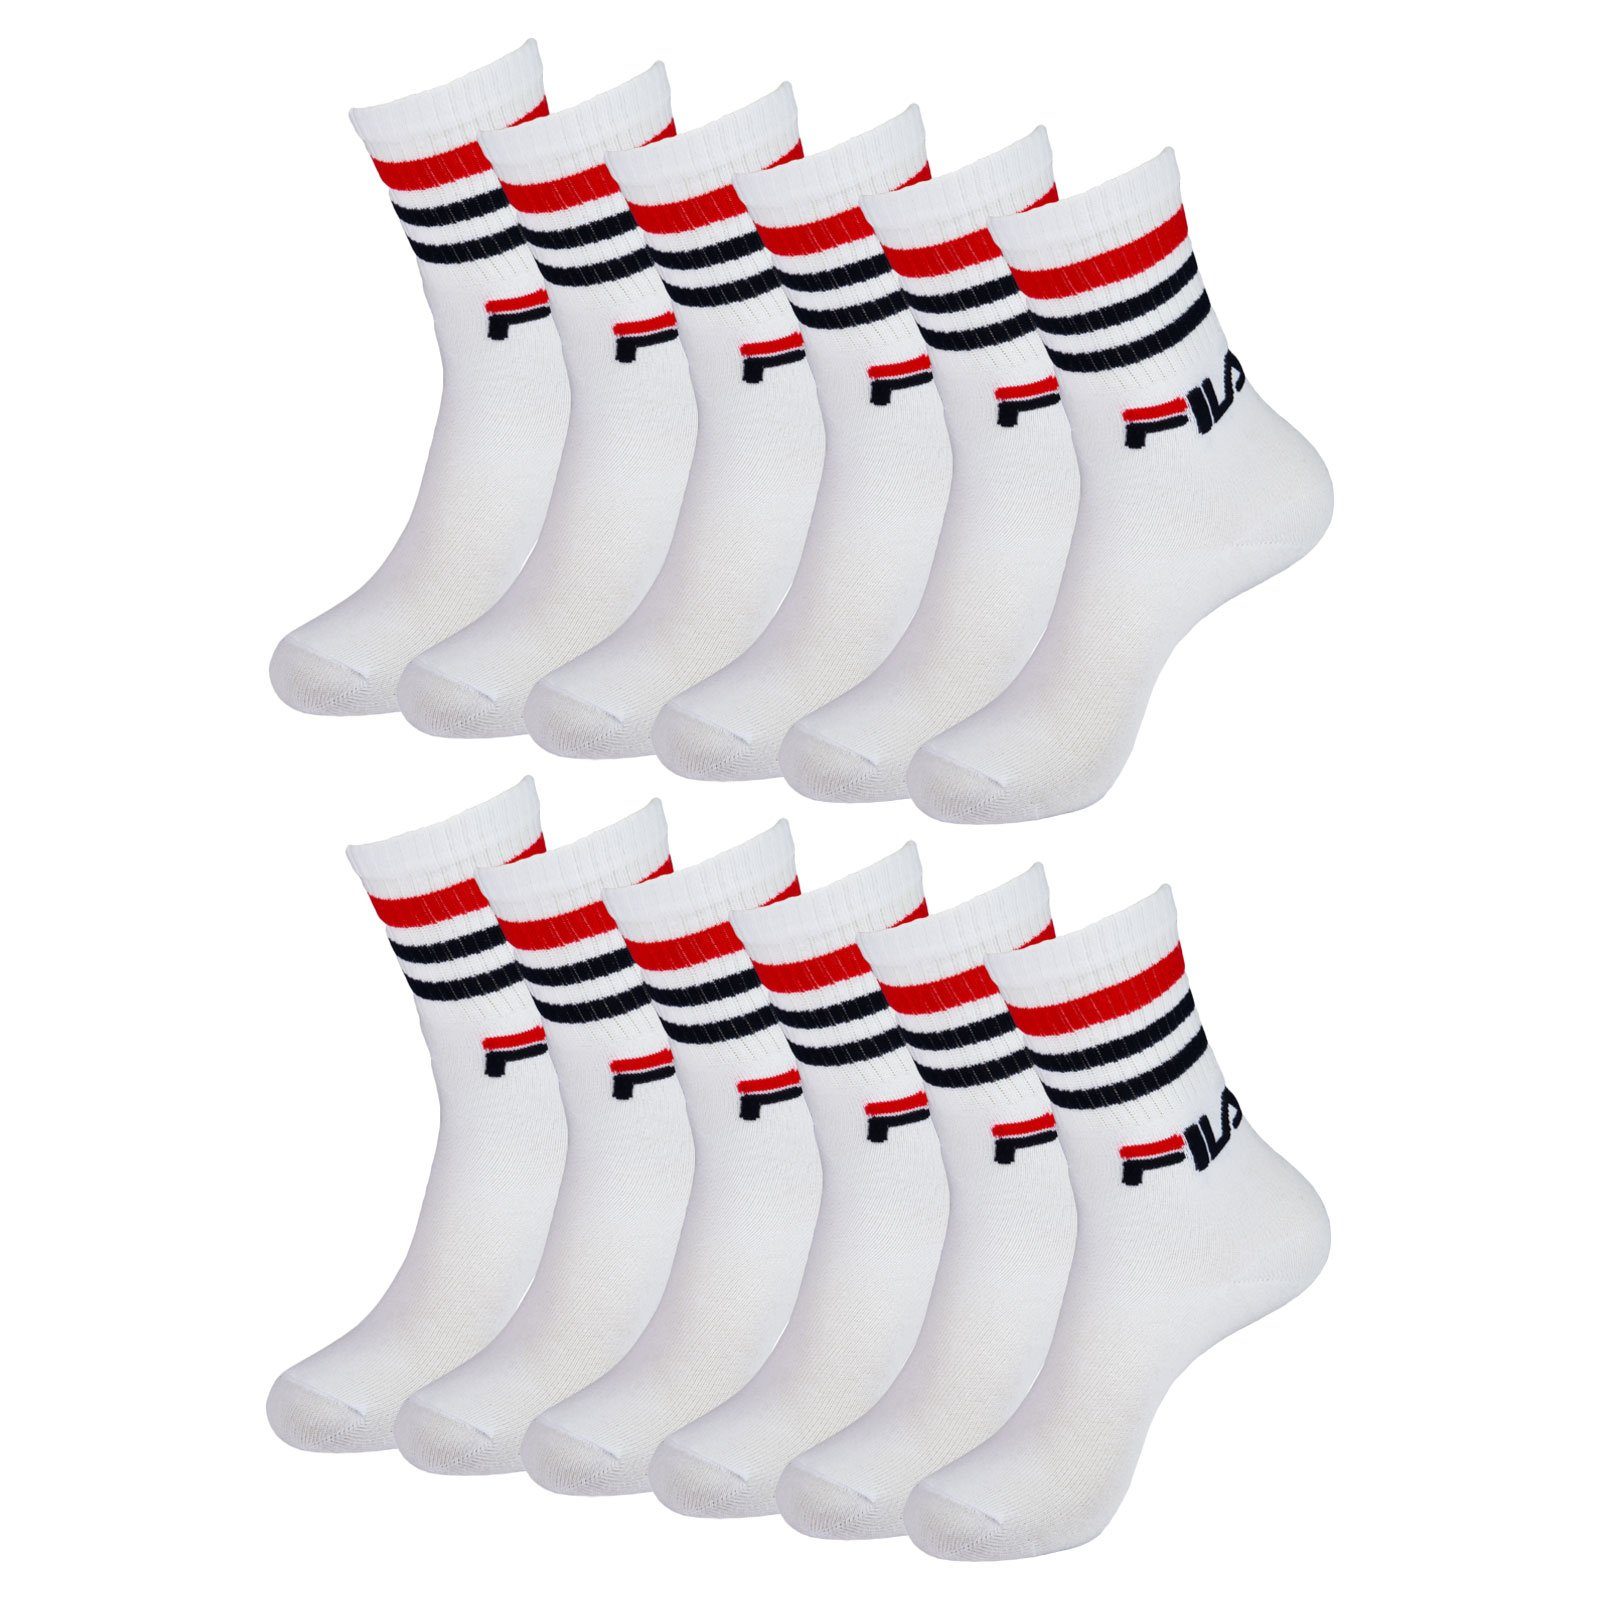 Fila Langsocken Crow Socks Calze (6-Paar) im sportlichen Retrolook mit Rippbündchen